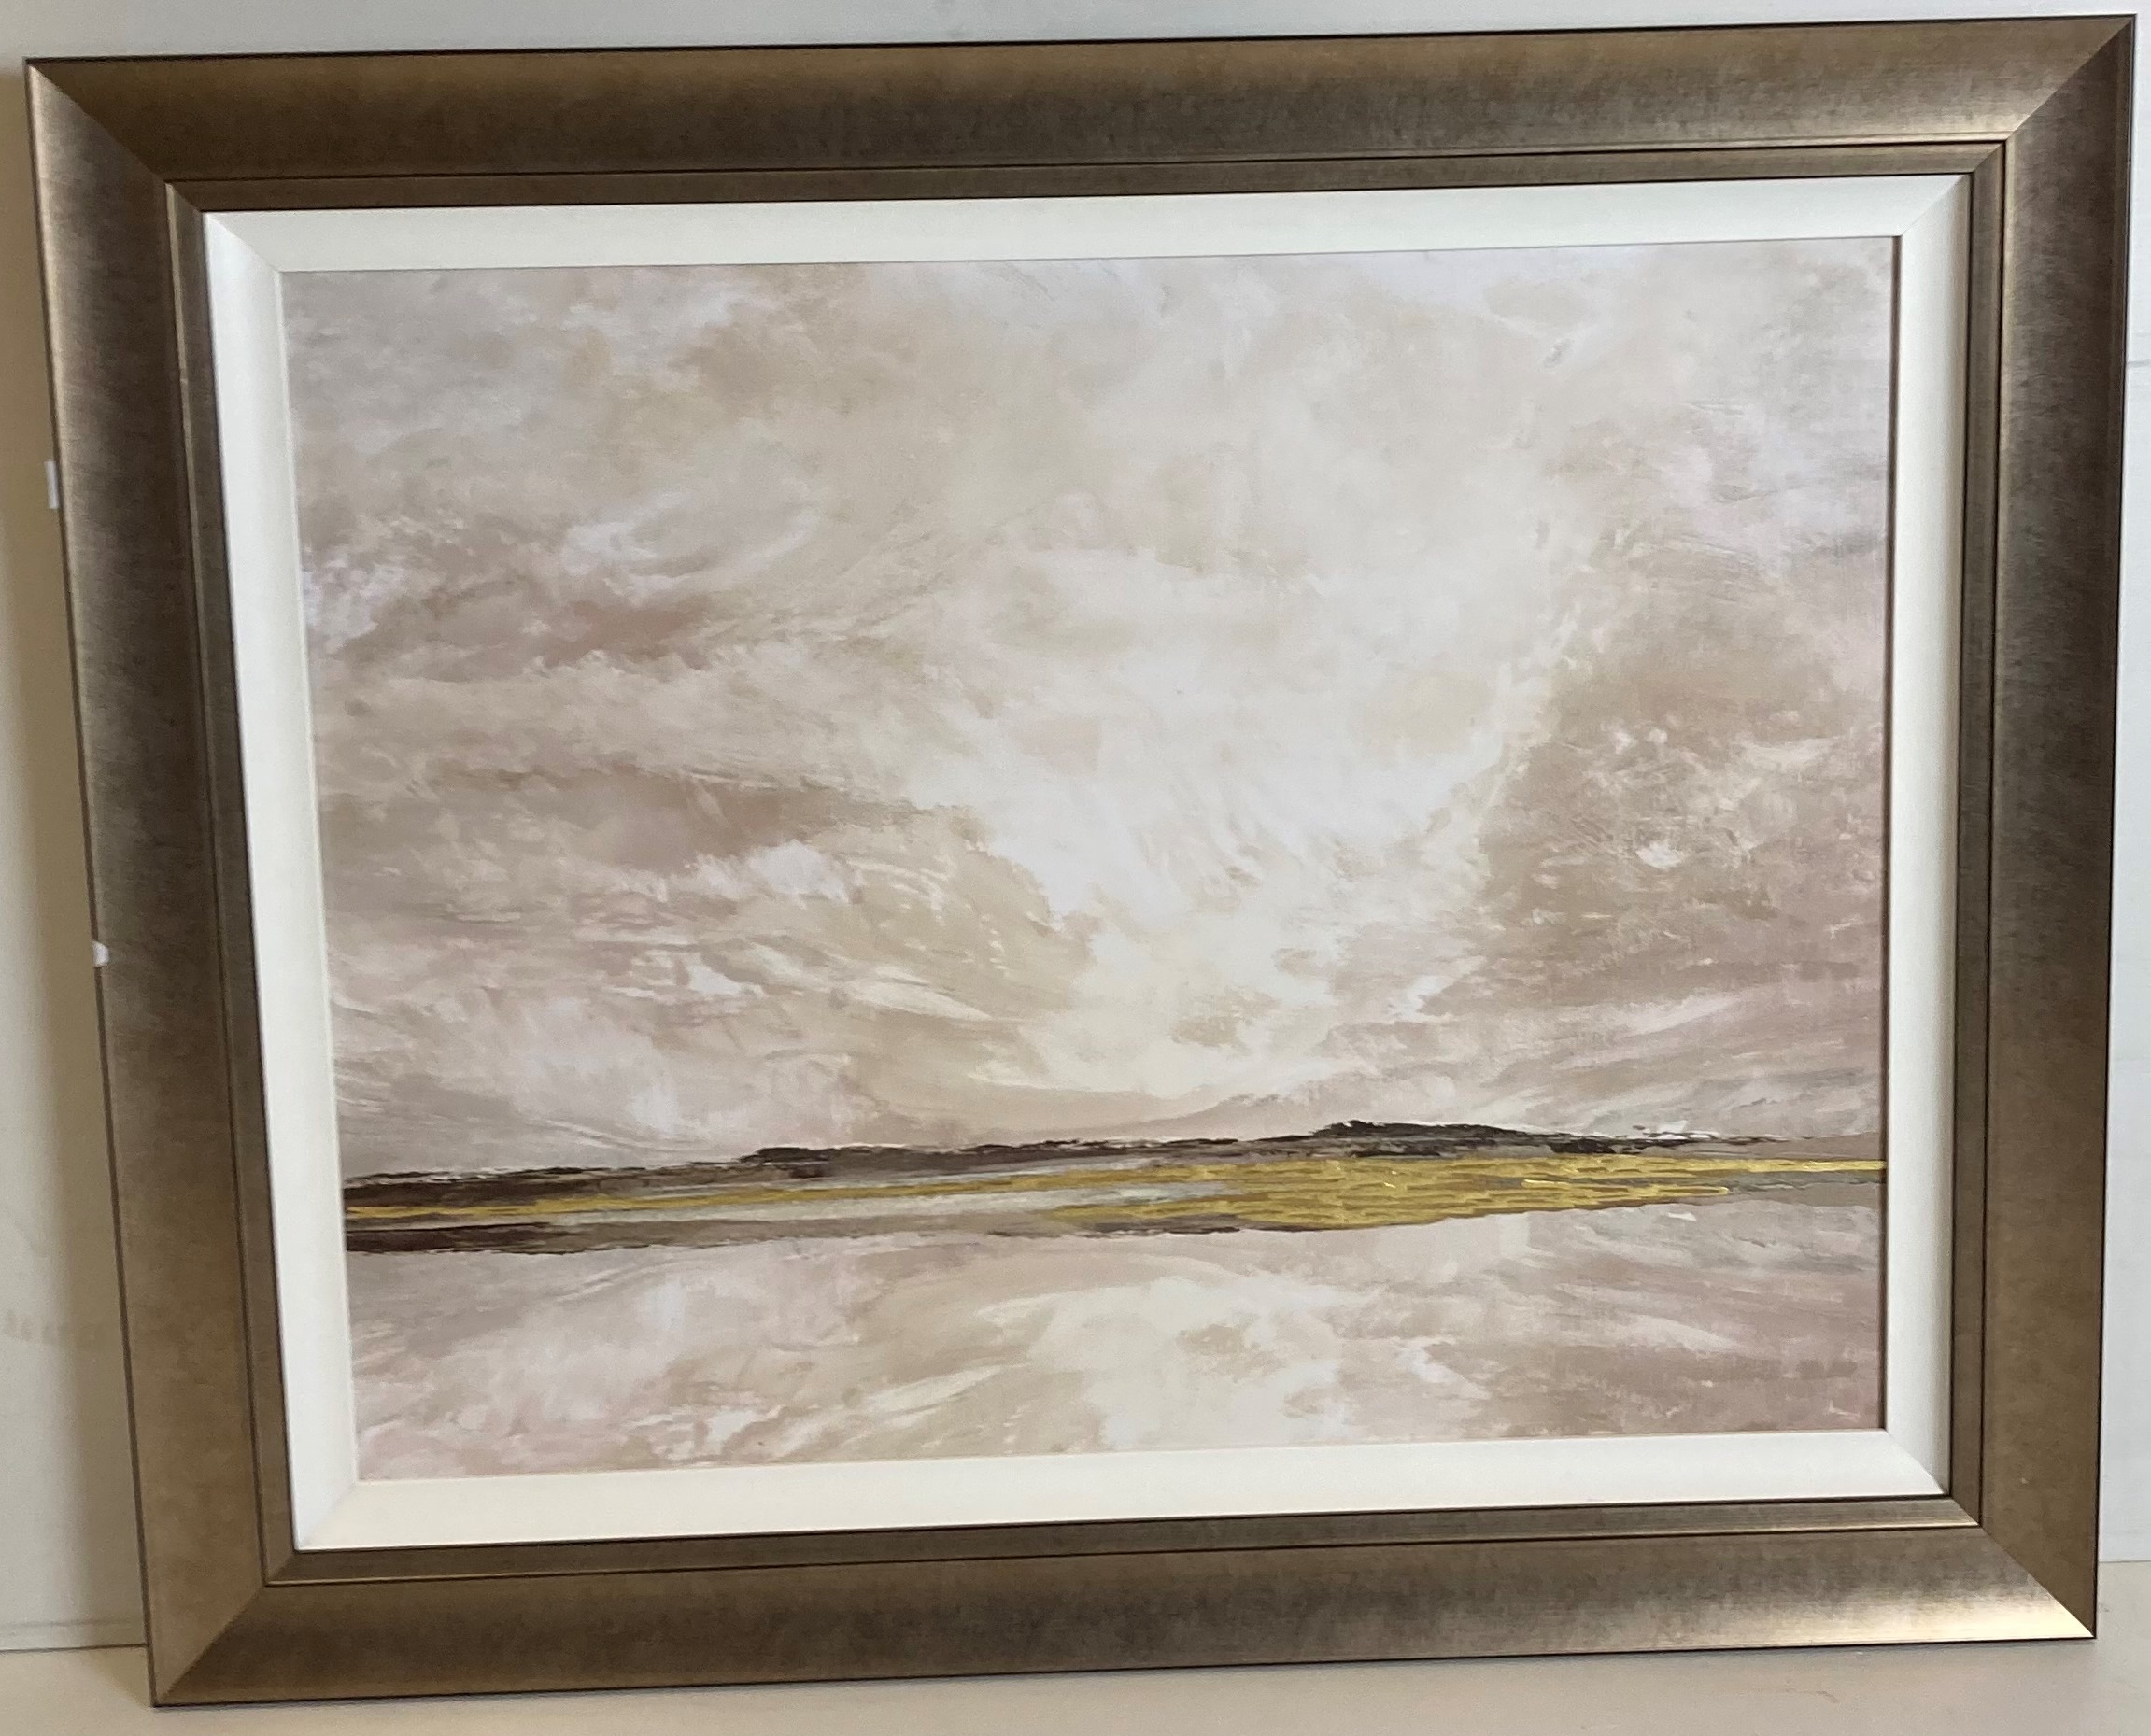 Framed print of coastal scene 'Opulent Skies', - Image 2 of 2